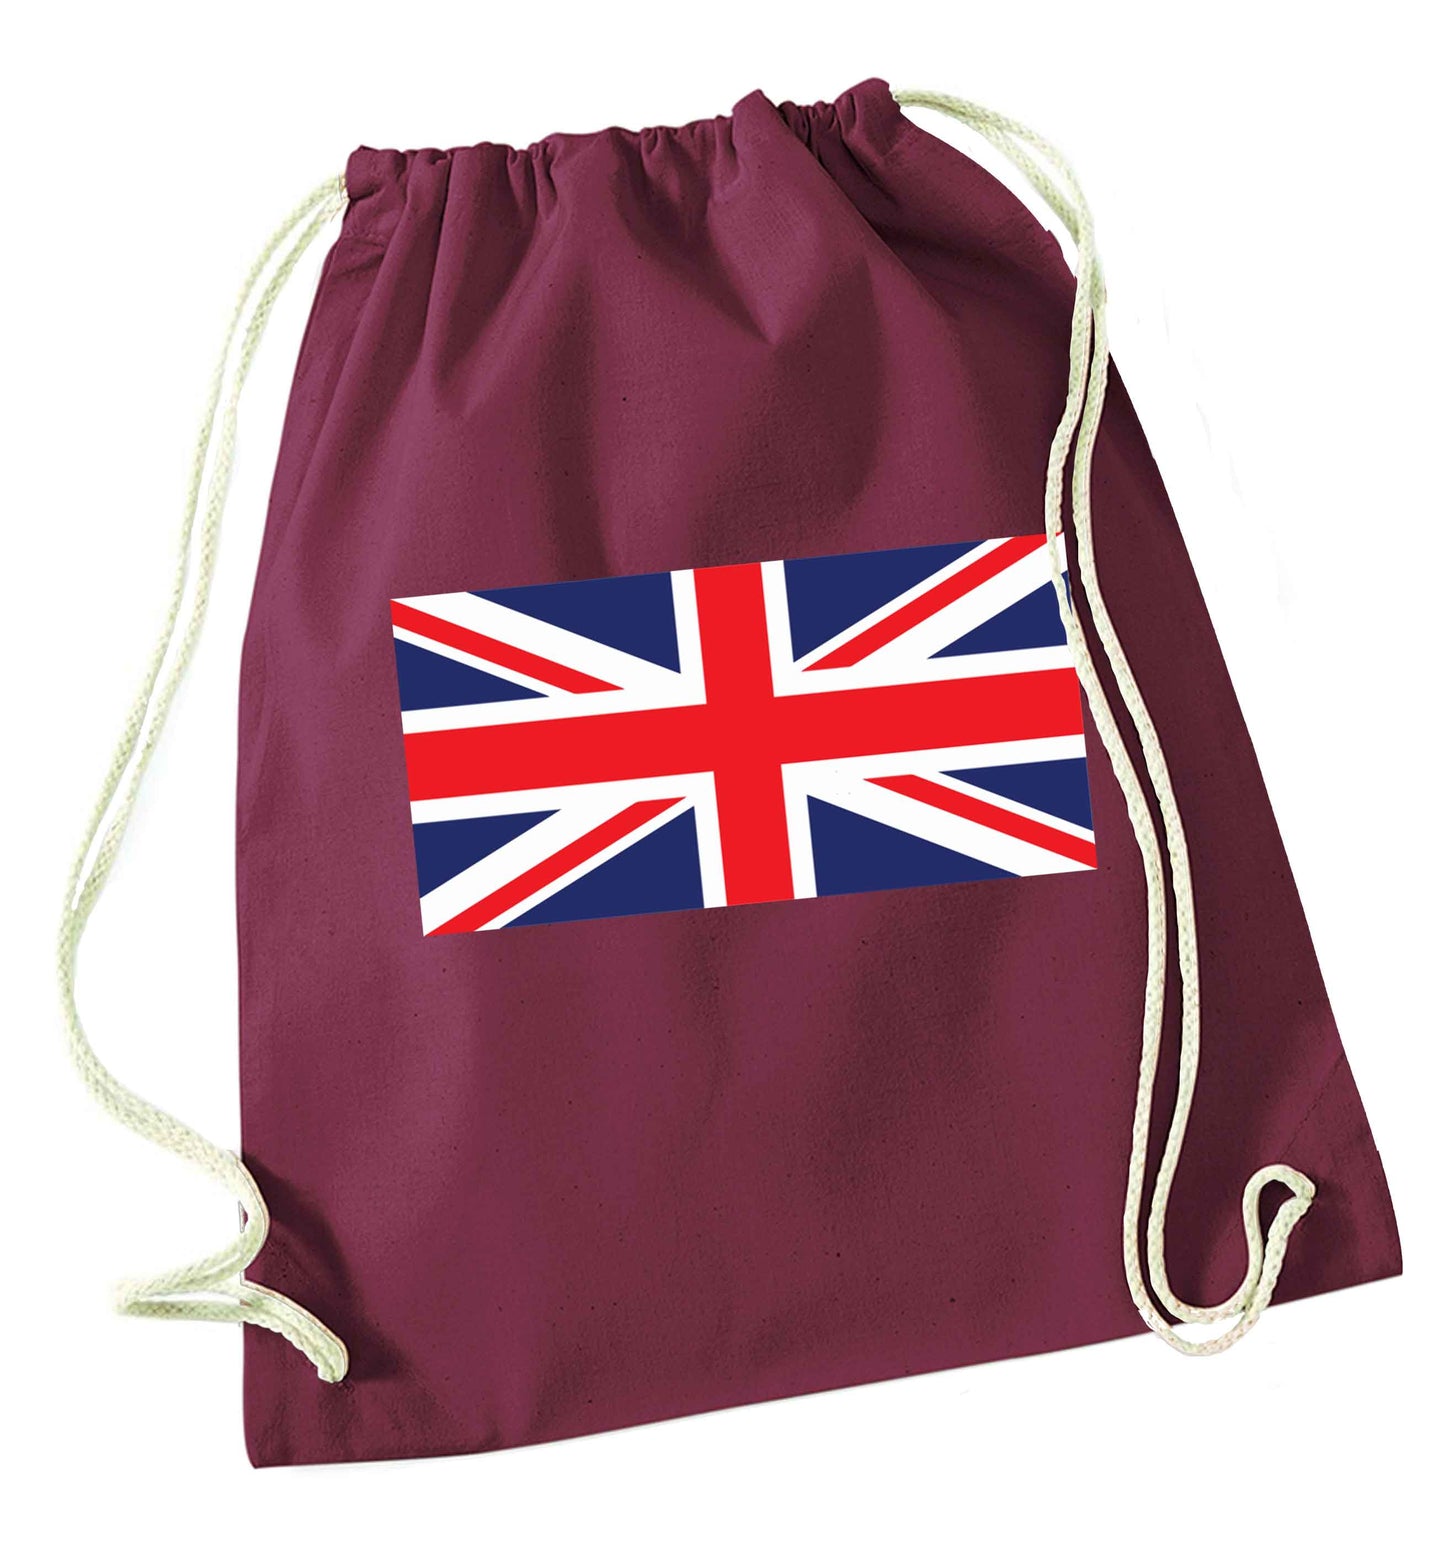 Union Jack maroon drawstring bag